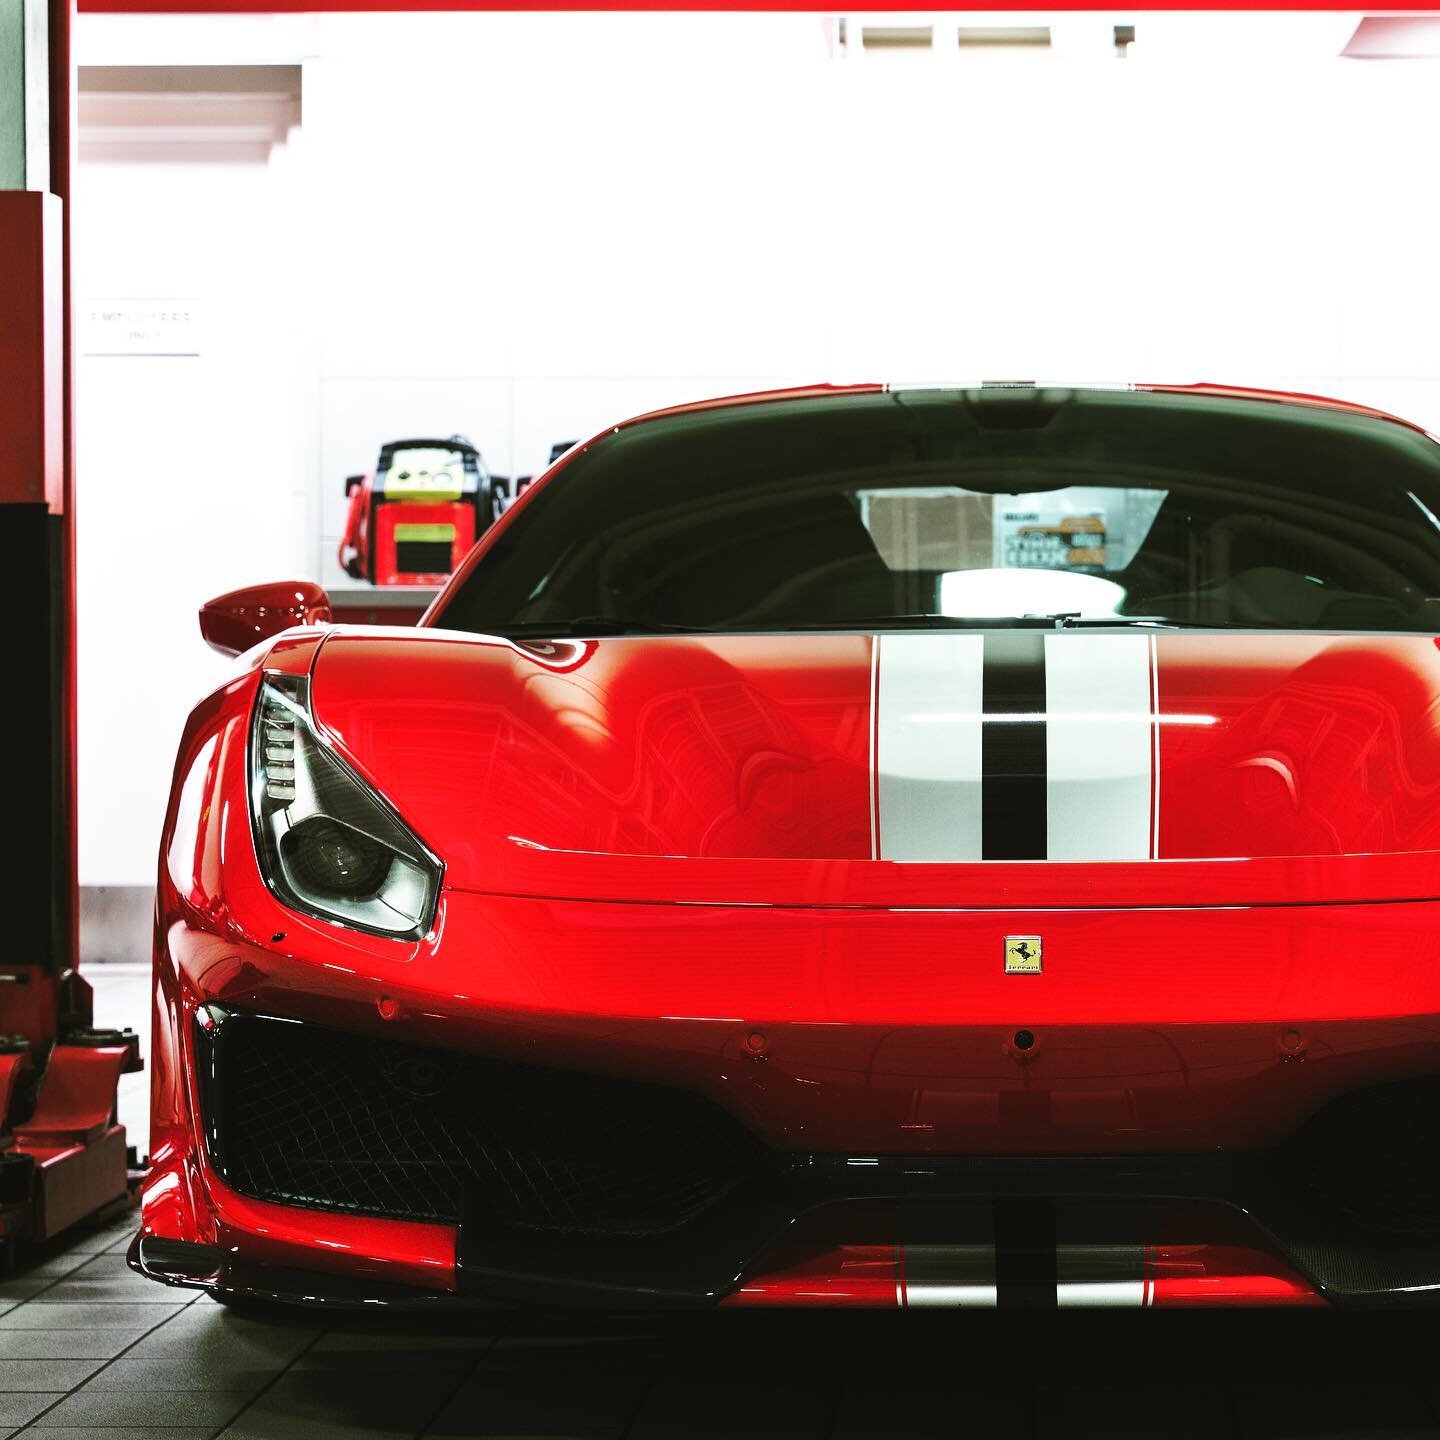 Ferrari 458 pista - commercial shoot 

&bull;&bull;&bull;

#ferrari #formula1 #f1 #cars #mercedes #supercar #redbull #carphotography #vettel #hamilton #formulaone #supercars #lamborghini #singaporegp #StatStory